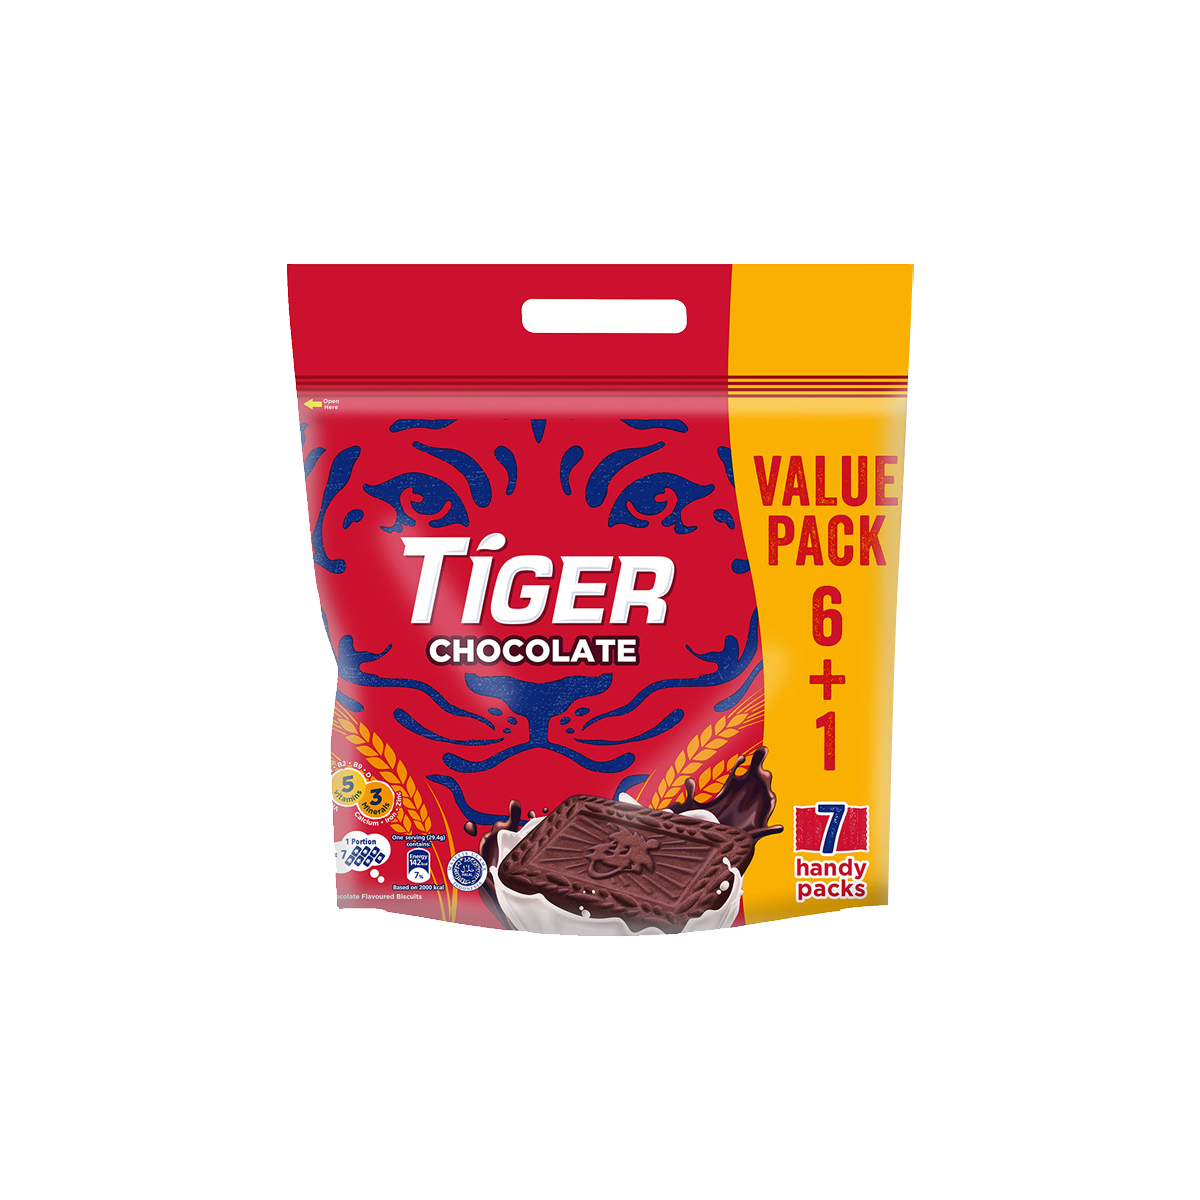 Tiger Chocolate Small 372.4g